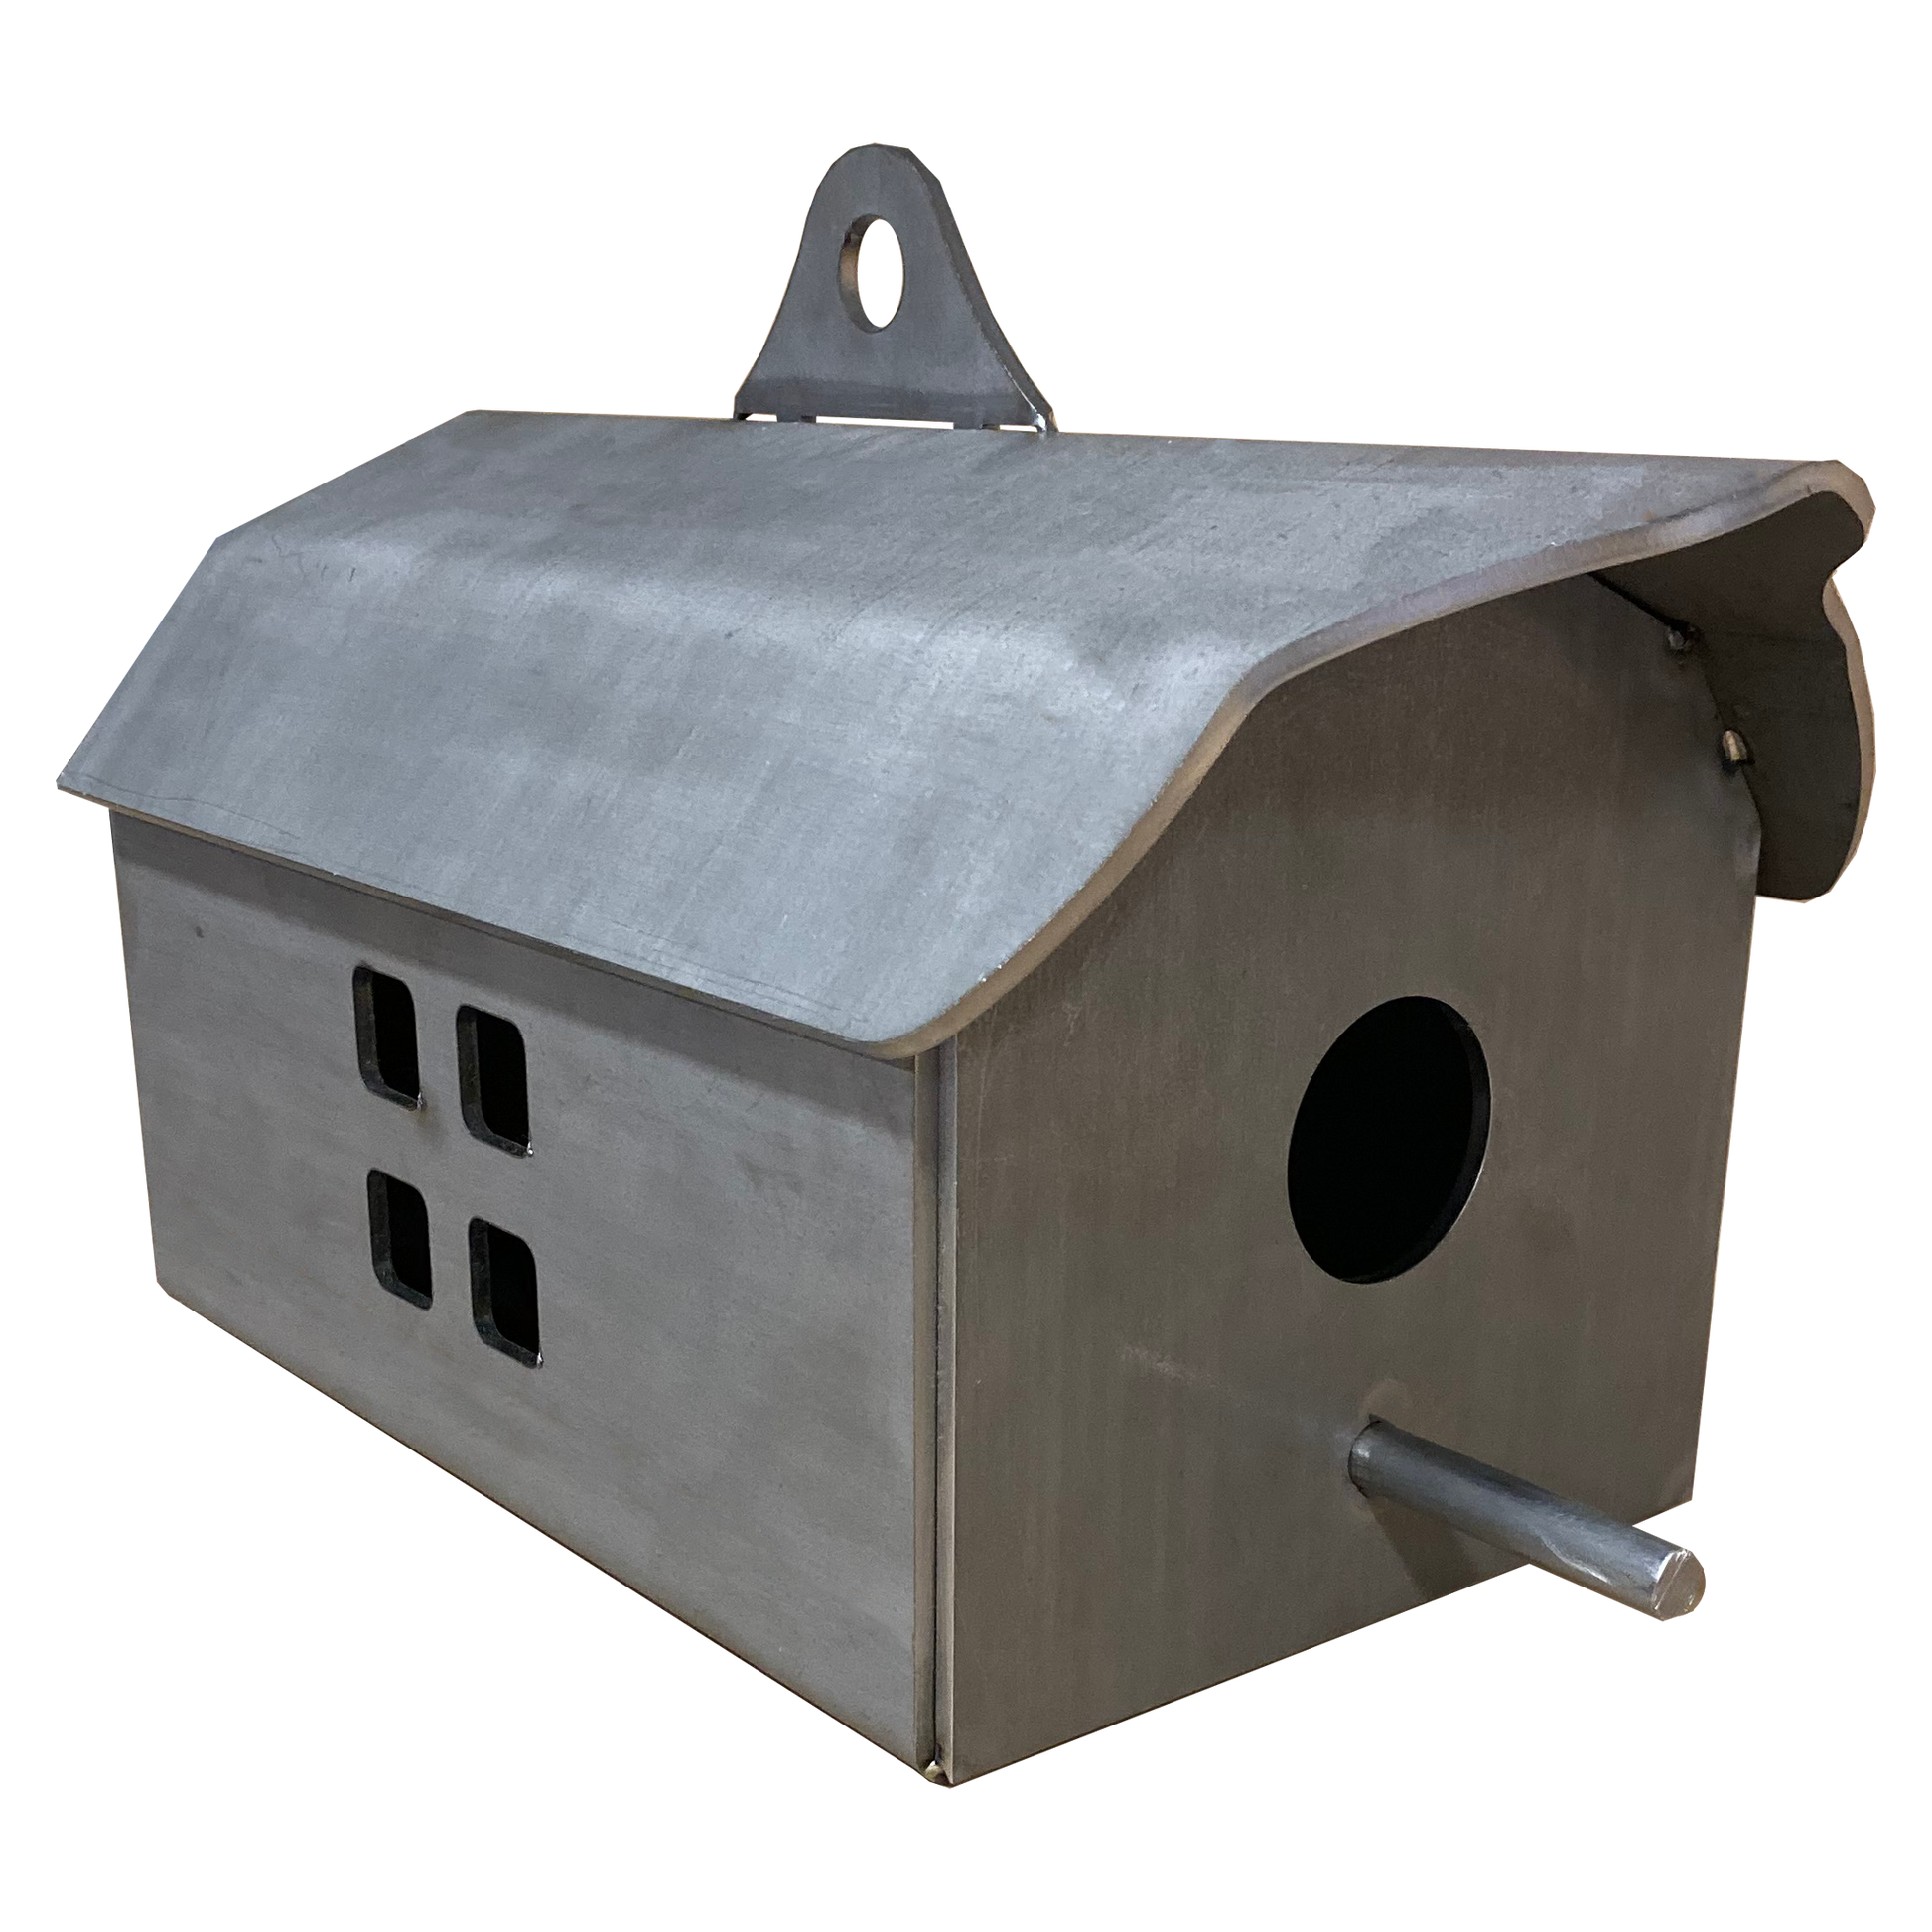 Steel Birdhouse Welding Kit - Weldermade